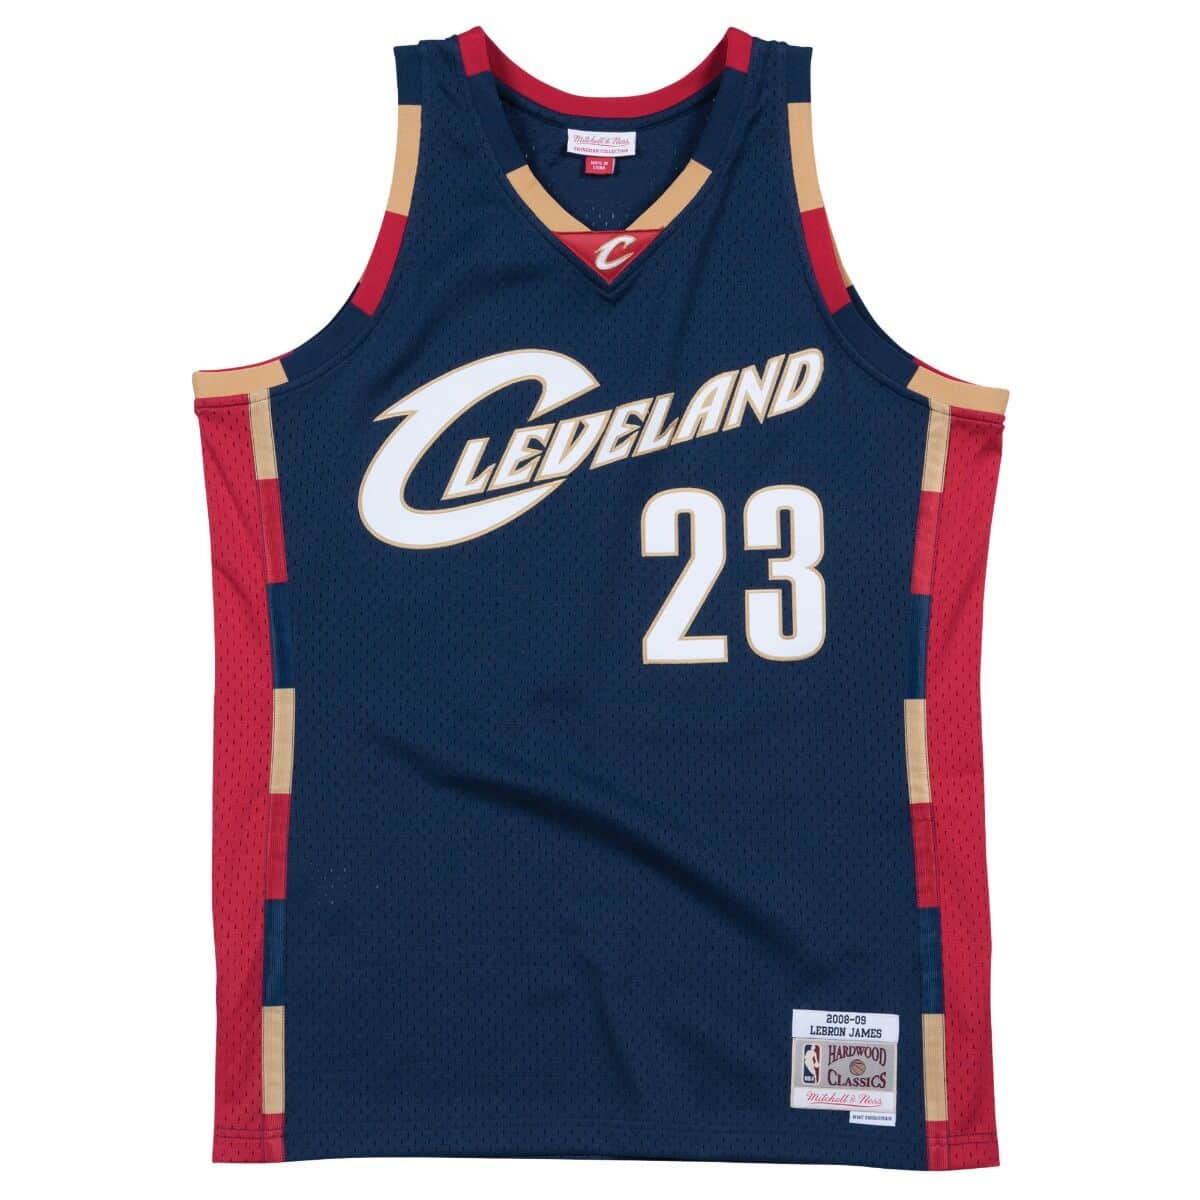 Cleveland Cavaliers Lebron James swingman jersey 2008-2009